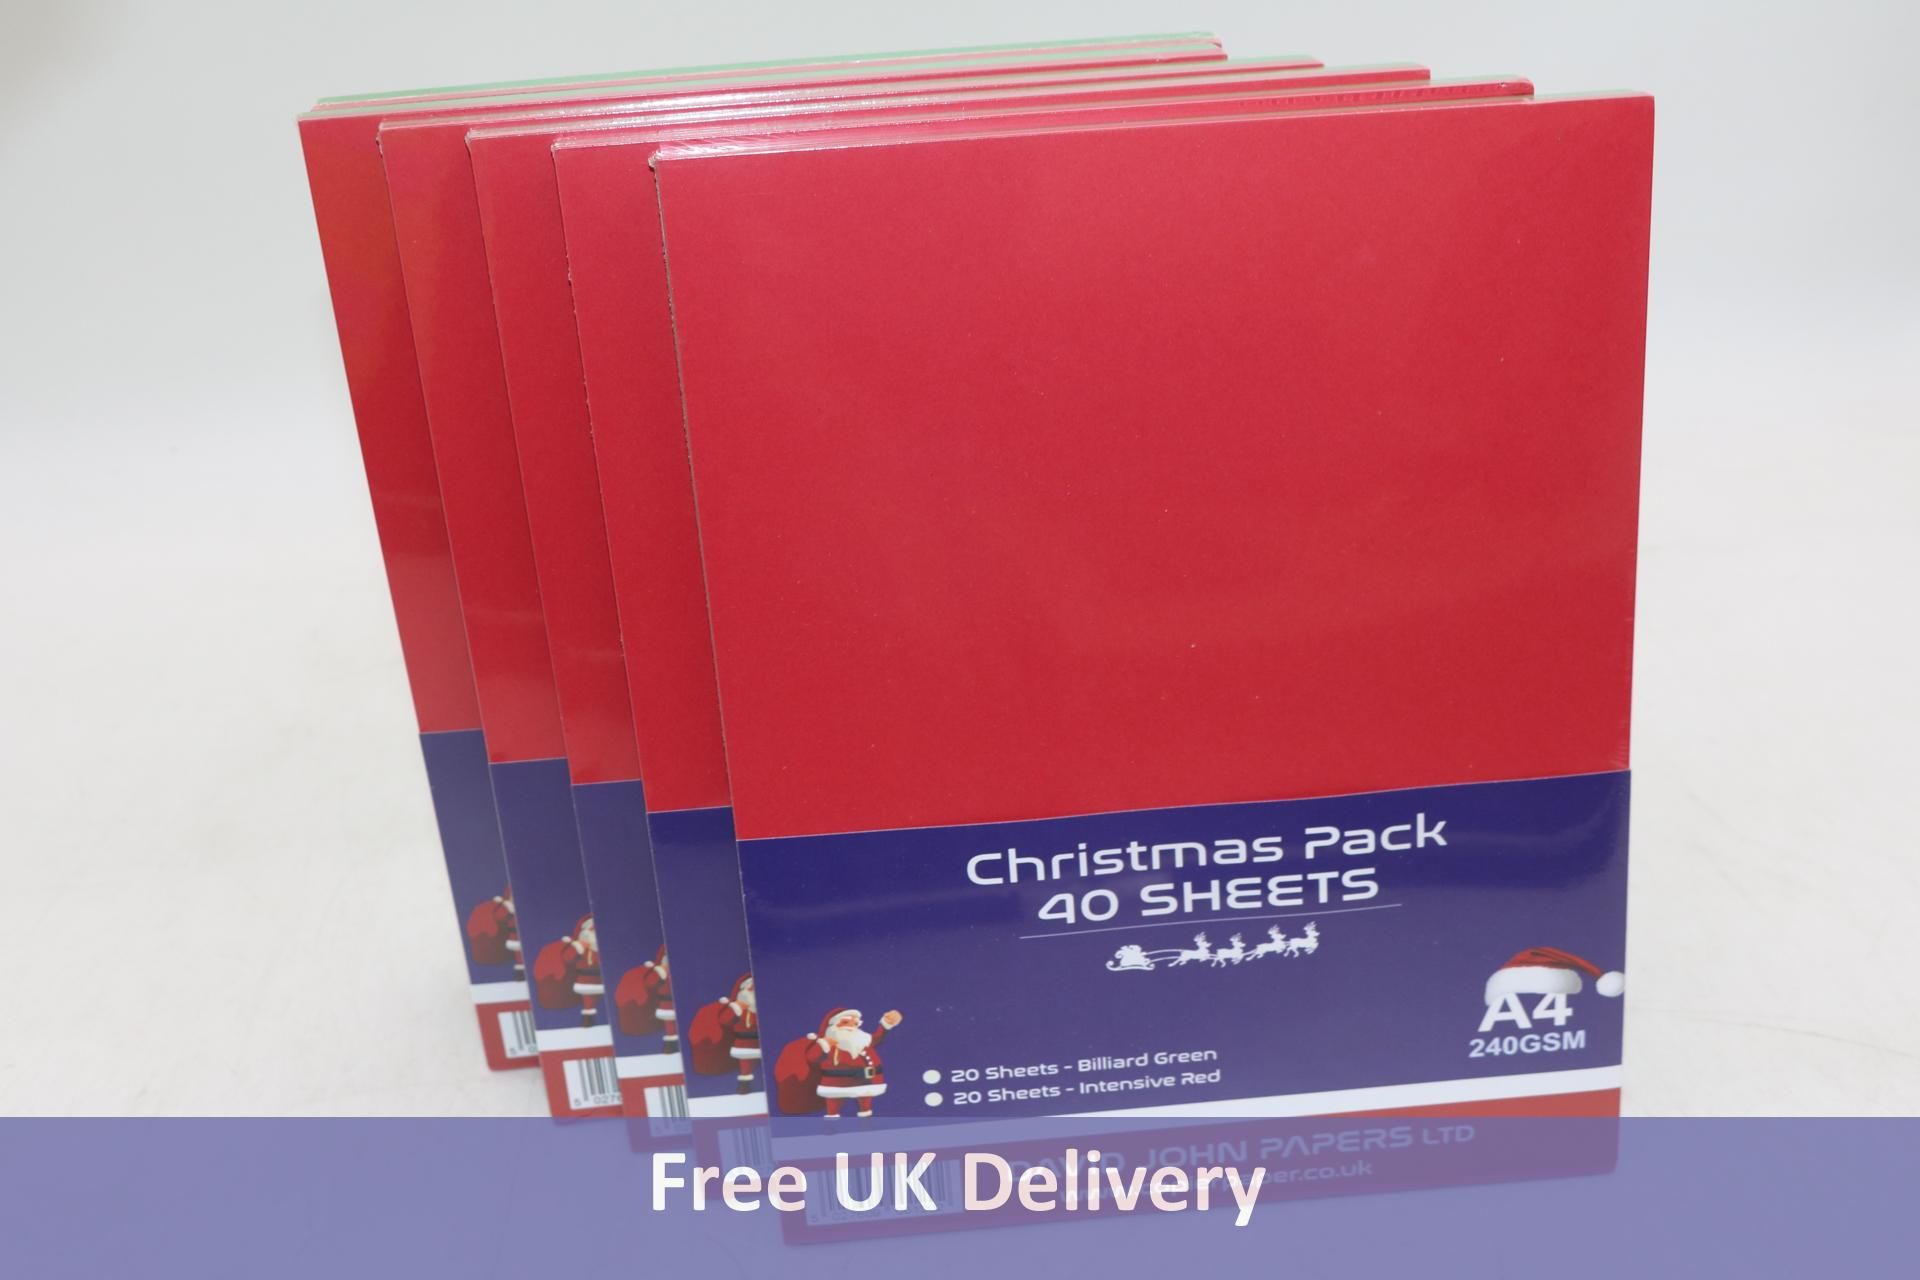 Eight packs David John Papers LTD Christmas Pack 40 Sheets, 20 Red, 20 Green